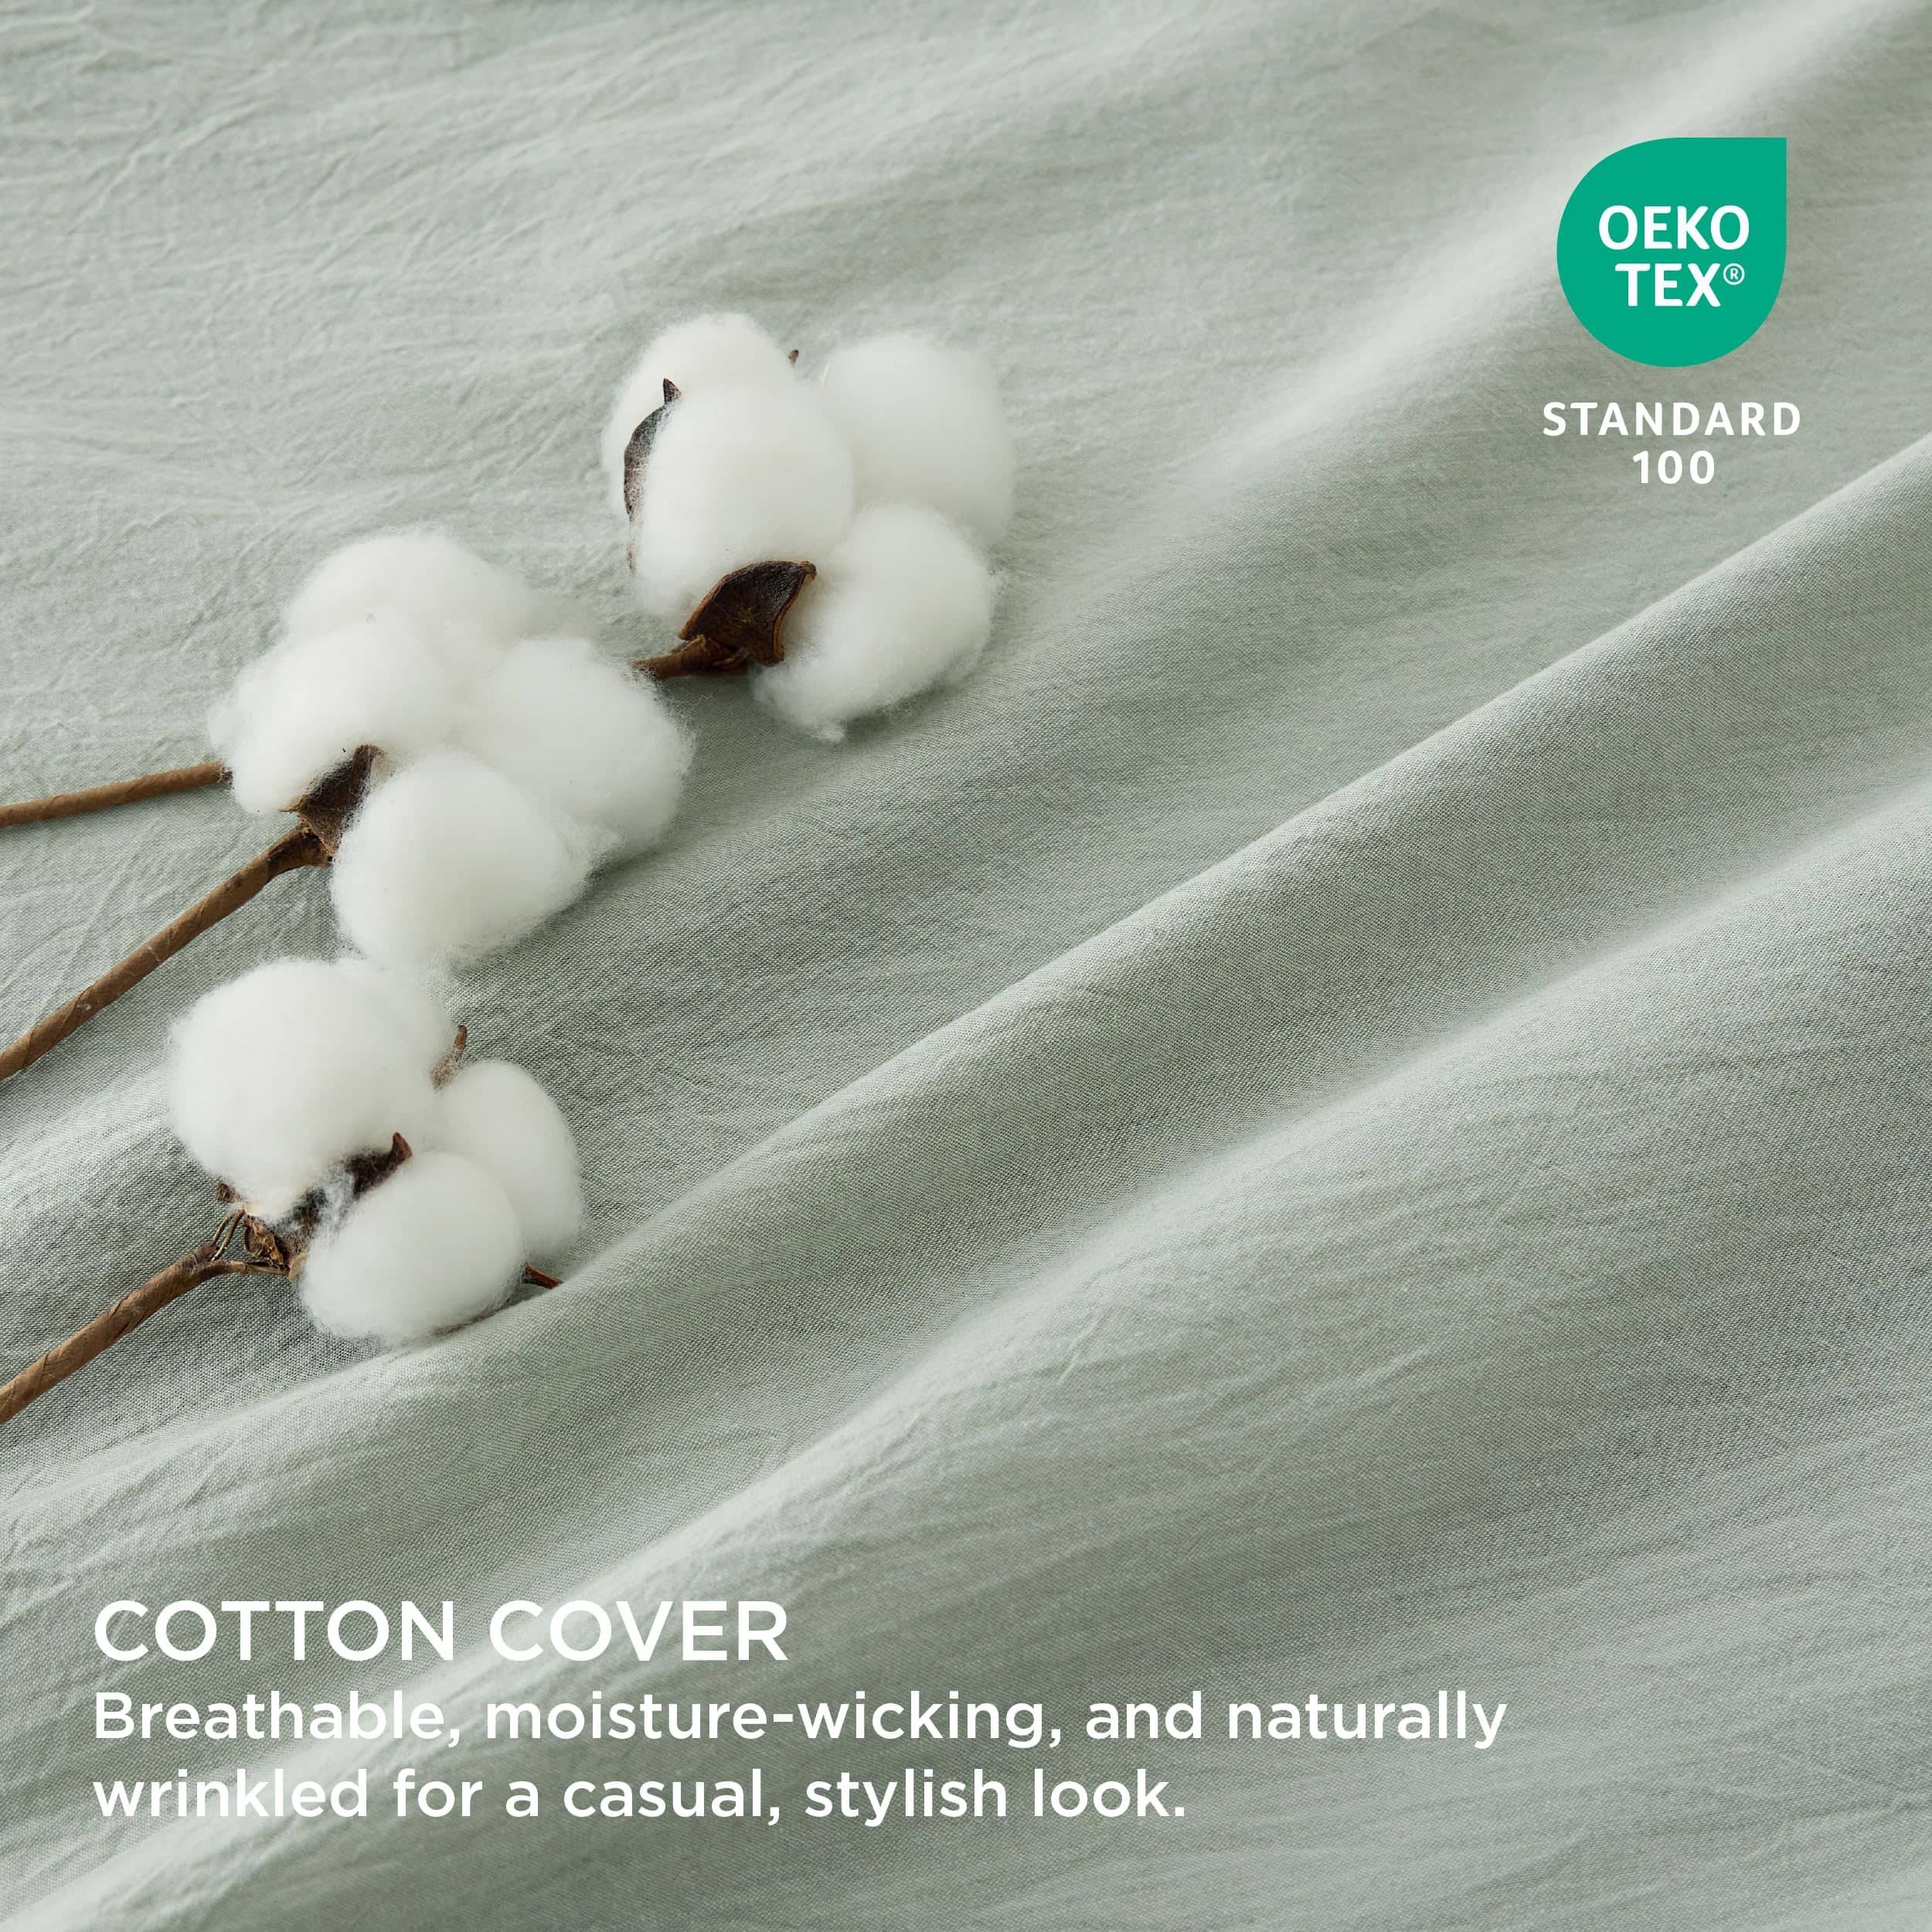 Prewashed Cotton Comforter Set